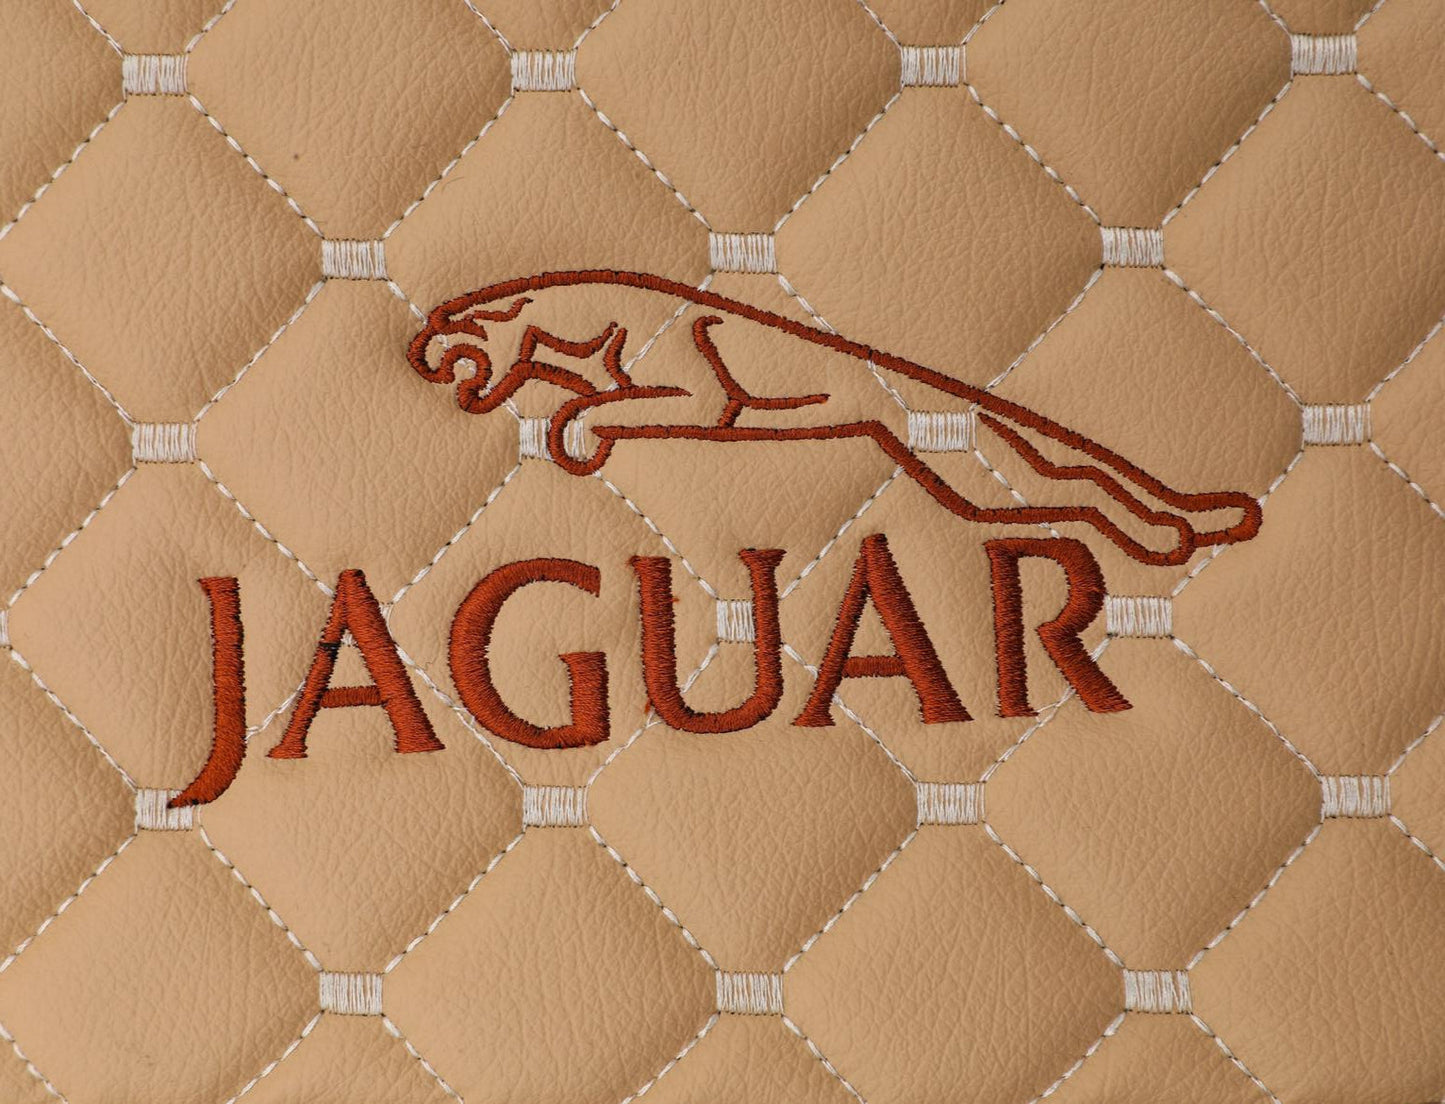 Jaguar XK8 All Model Special Design Leather Custom Car Mat